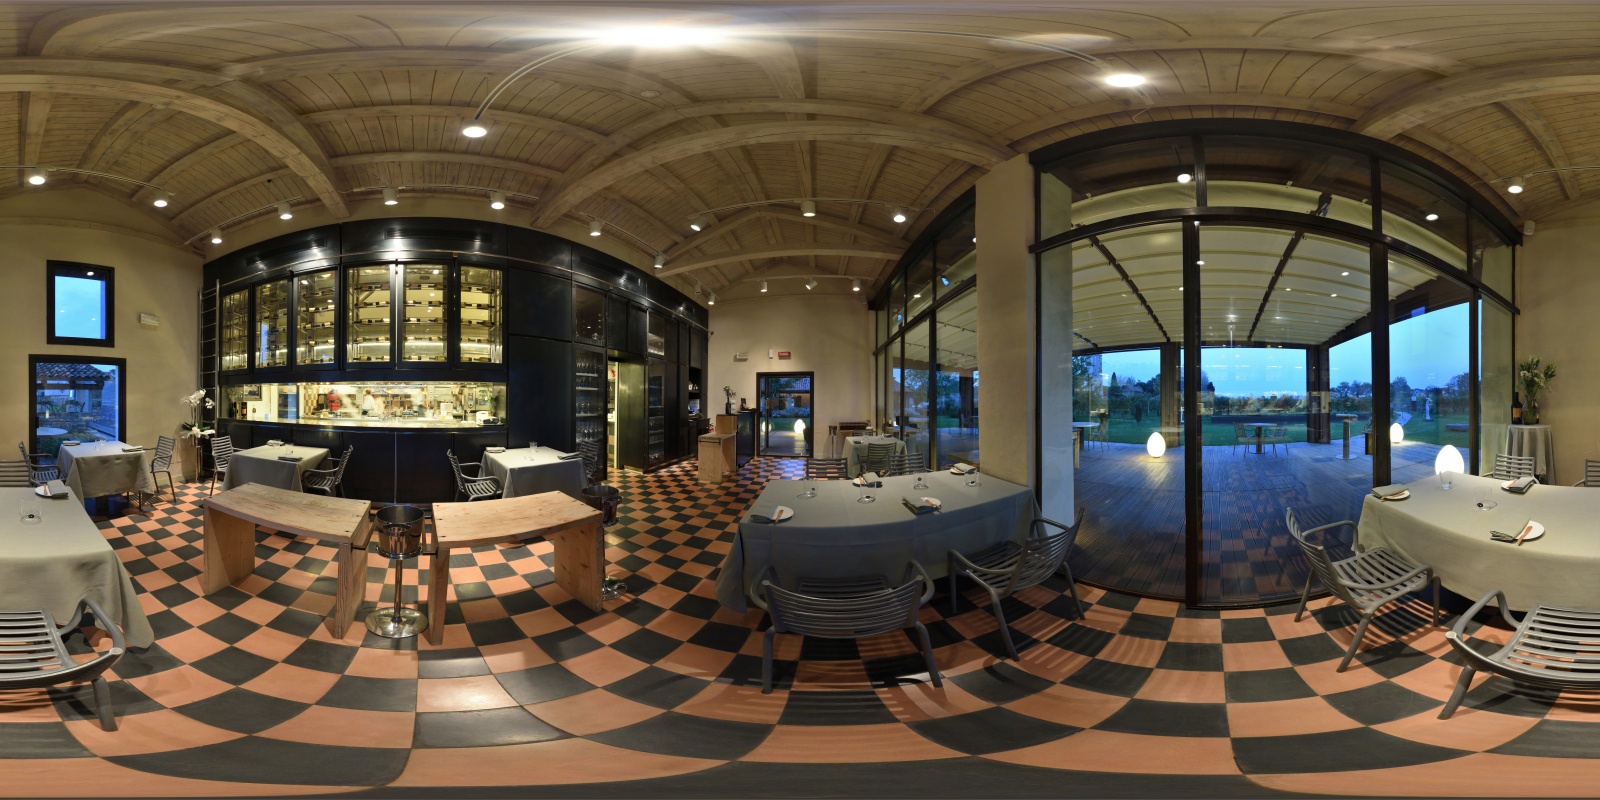 A 360 degree virtual tour of the interior of a Michelin star restaurant, Mazzorbo, Veneto, Italy